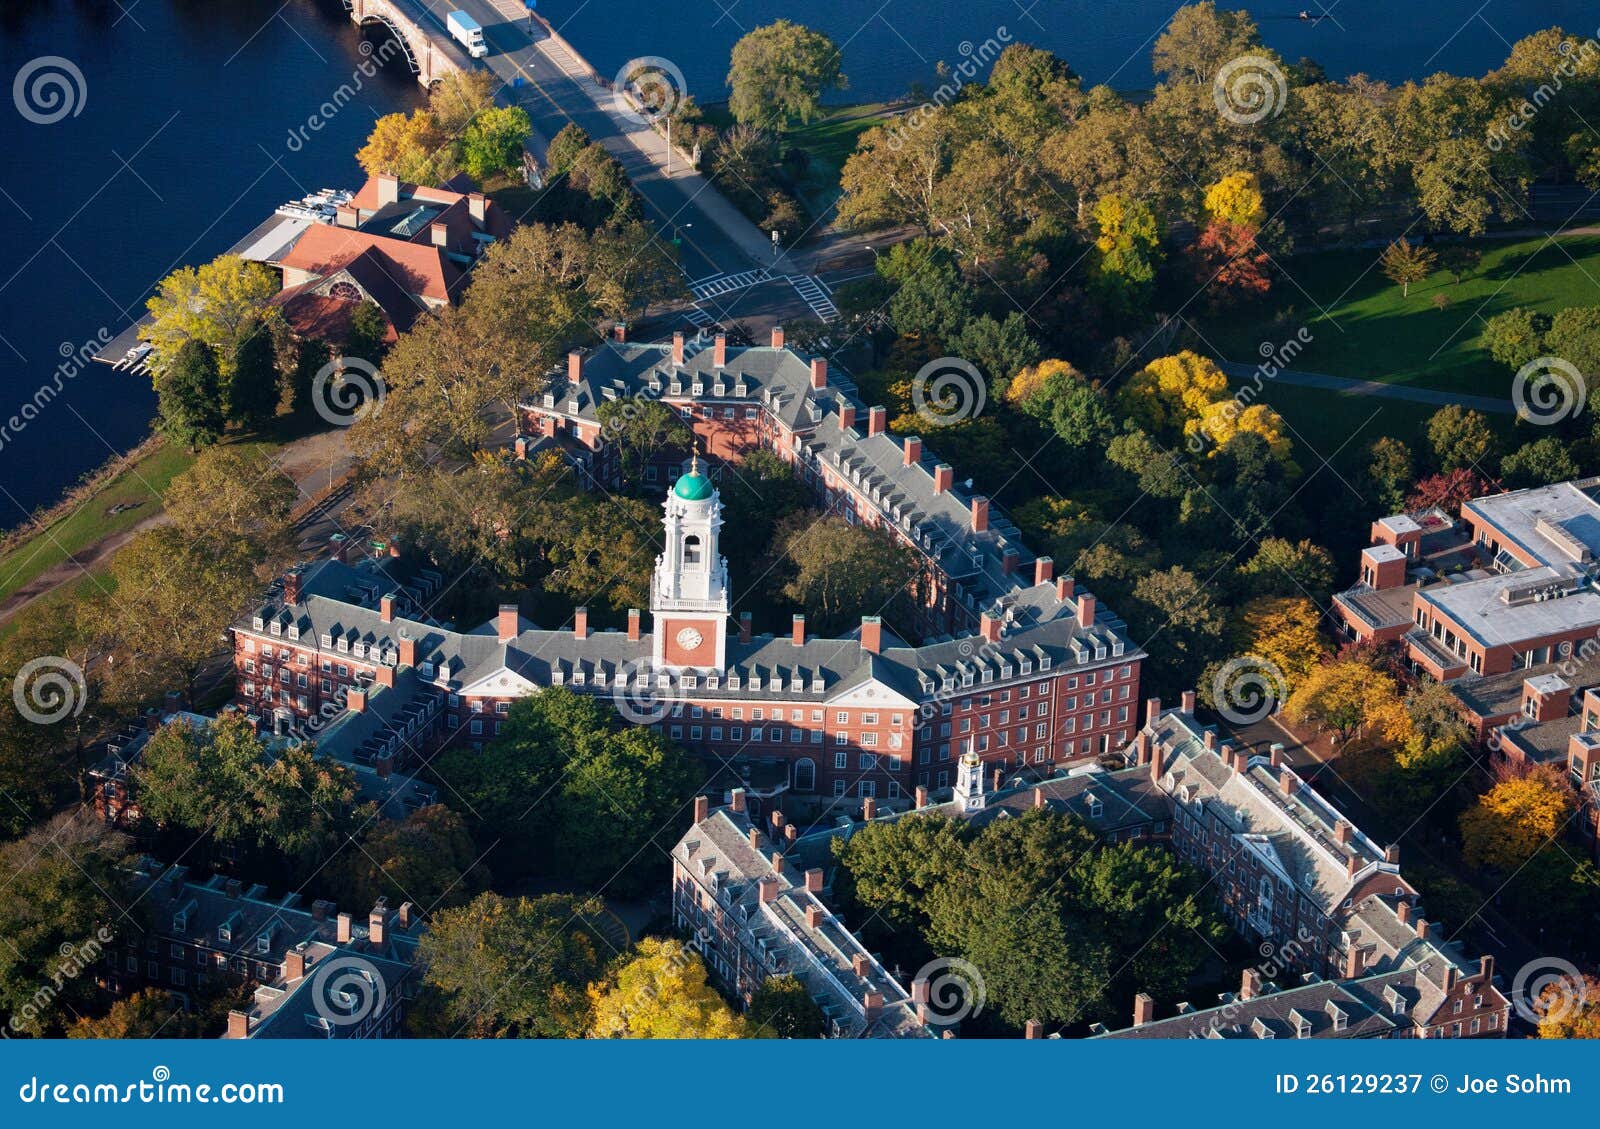 where is harvard university located